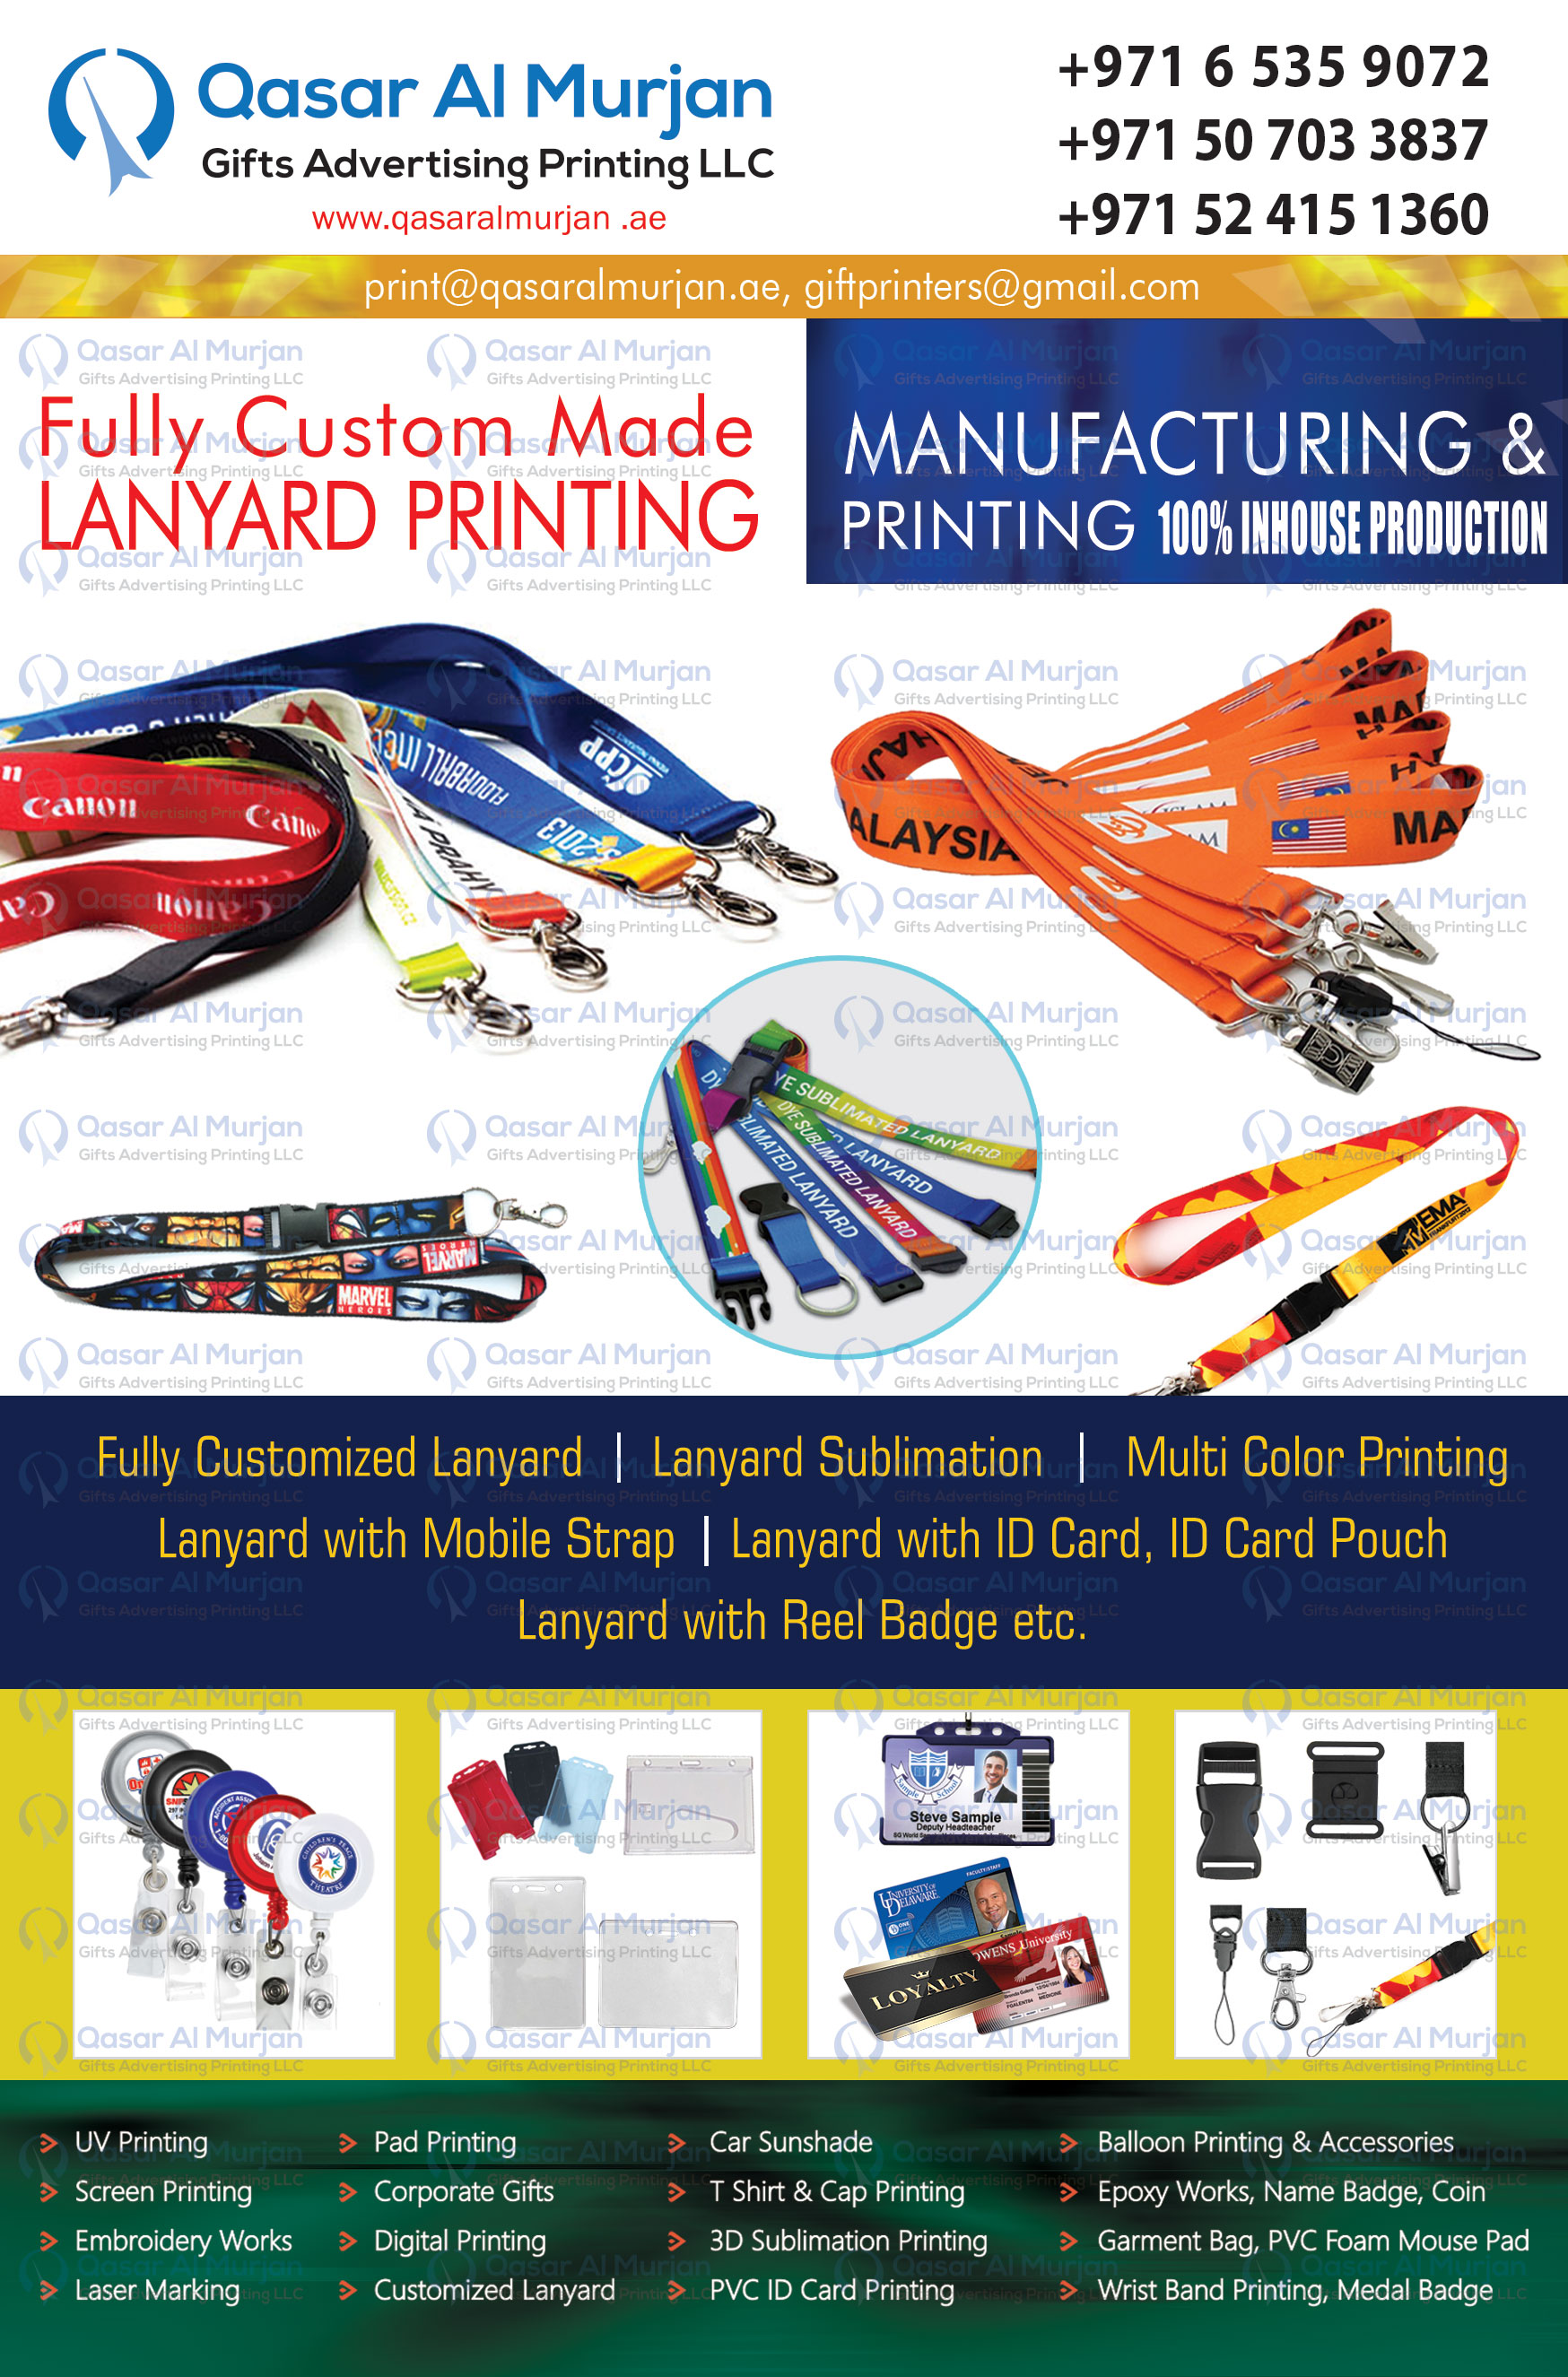 customized lanyard manufacturer and printing in sharjah uae